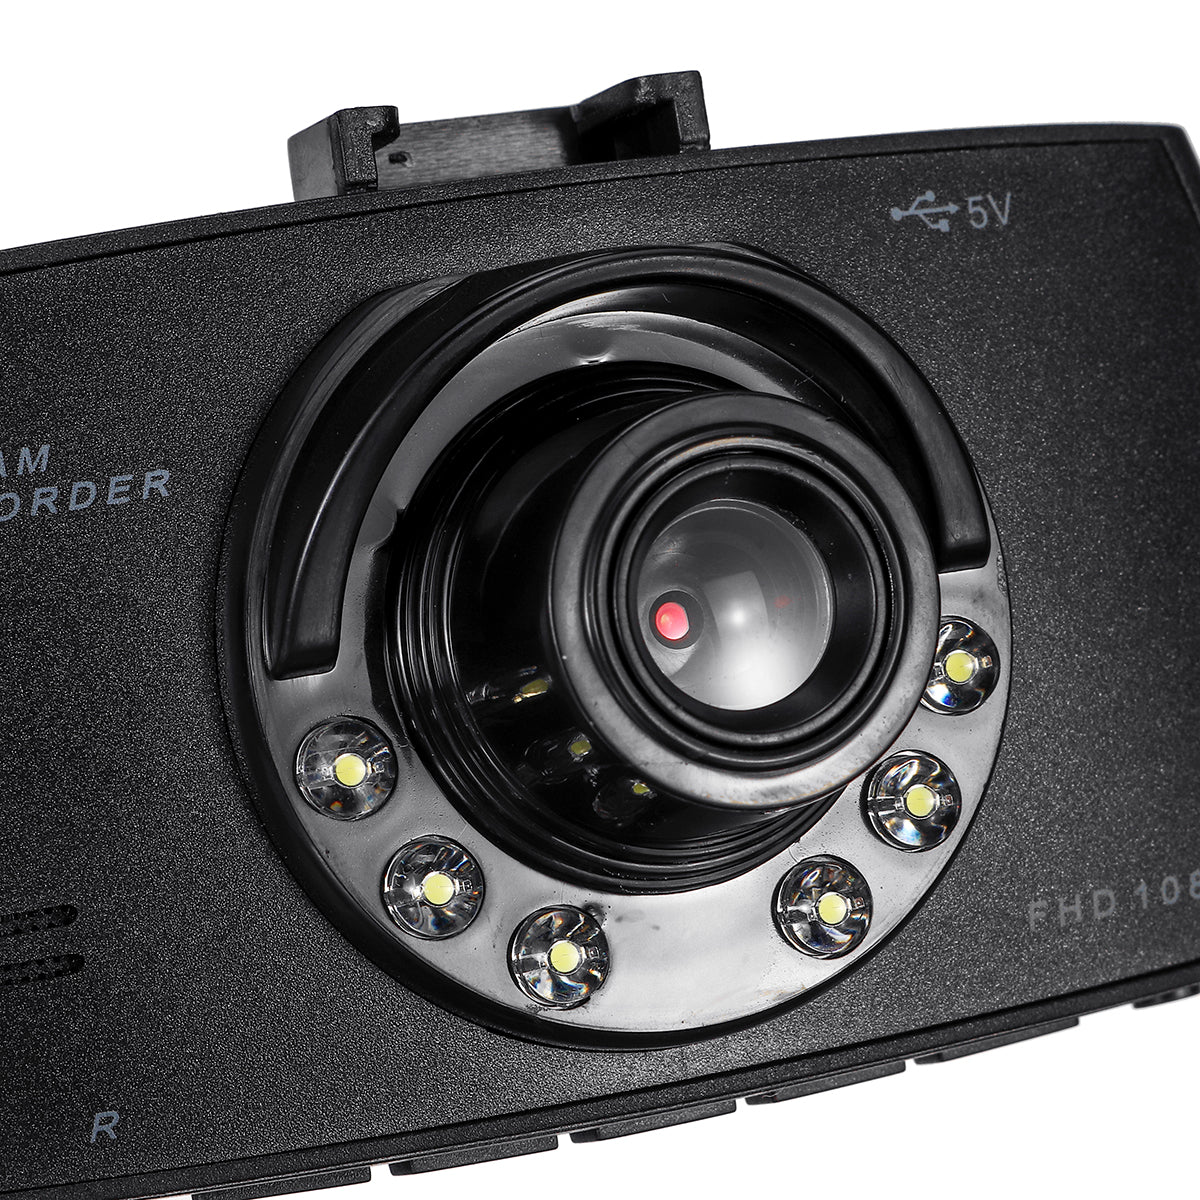 Black 2.7 Inch LCD Car DVR Camera Full HD 1080P 170 Degree Dashcam Video Registrars for Cars Night Vision Built-in Microphone